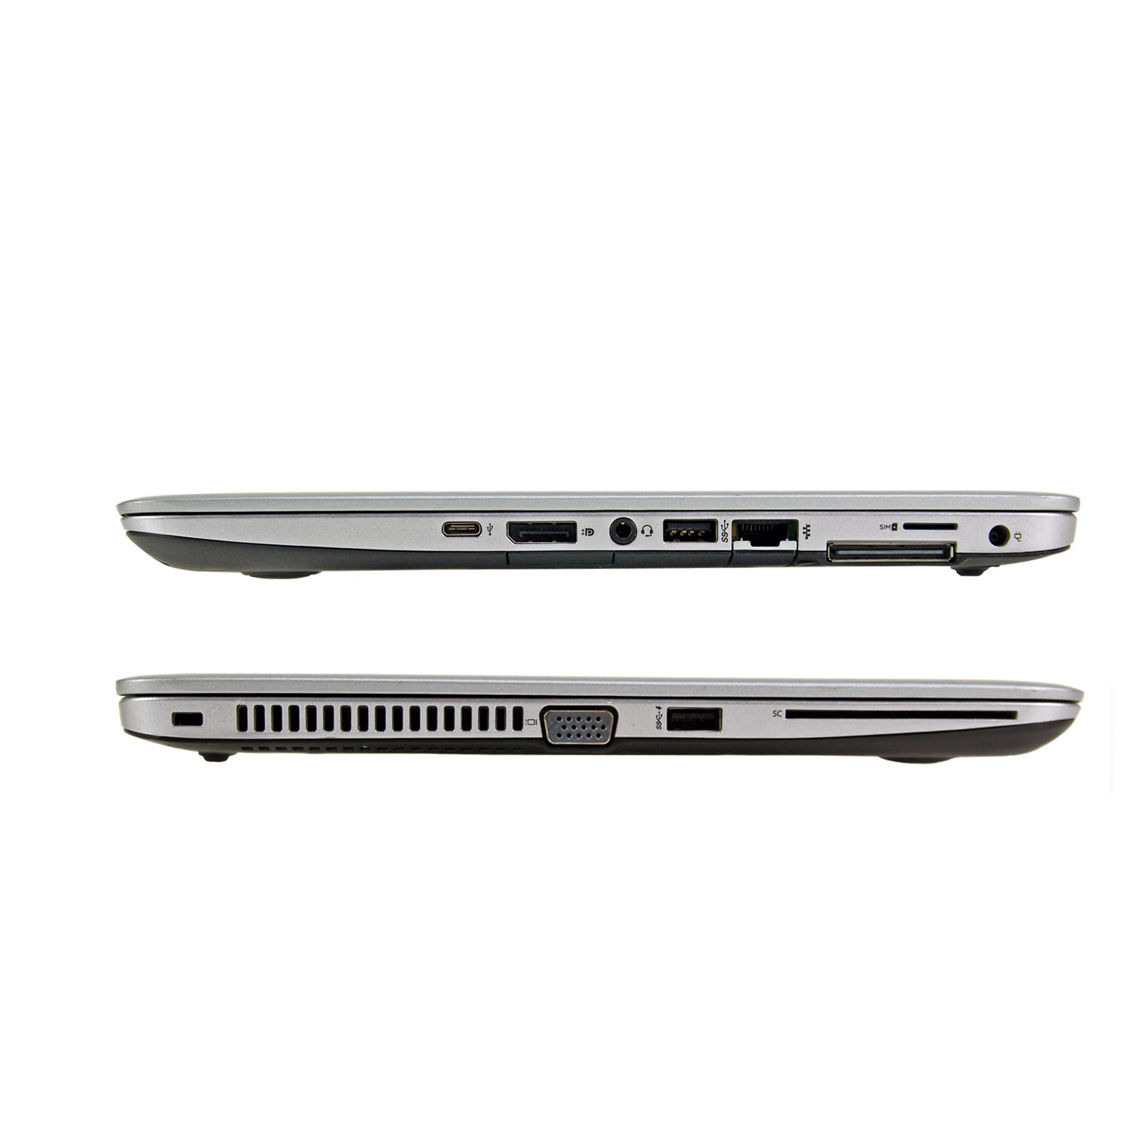 HP 840 G3 Core i7-6600U 2.6GHz 16GB Ram 256GB SSD Laptop (Refurbished) - Image 3 of 4